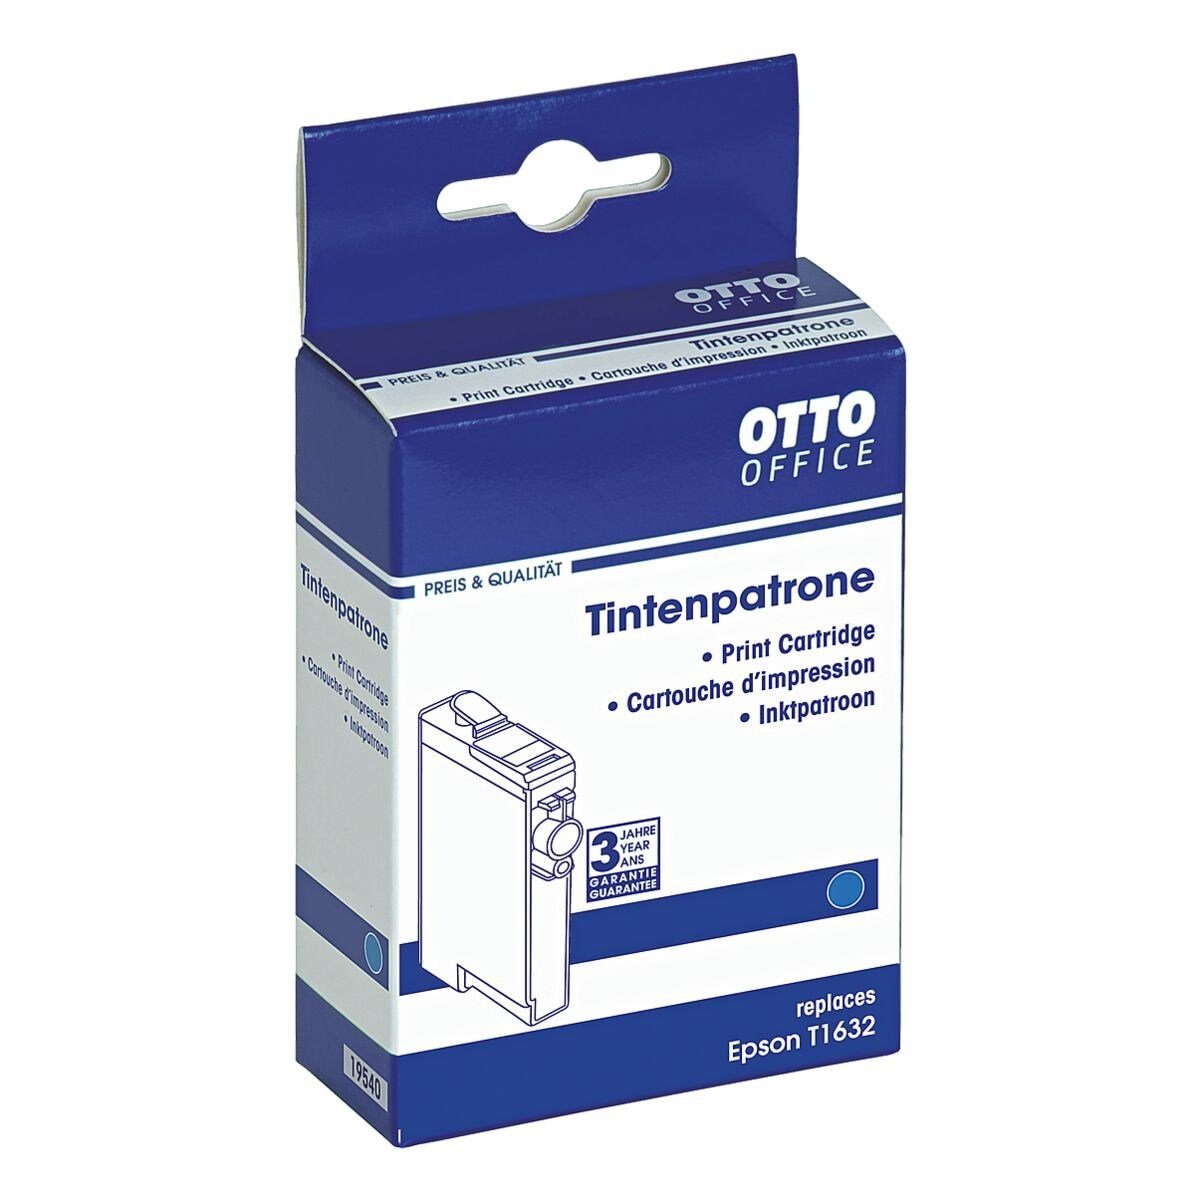 Otto Office Office T1632XL Tintenpatrone »T1632XL«, cyan) Epson ersetzt (1-tlg